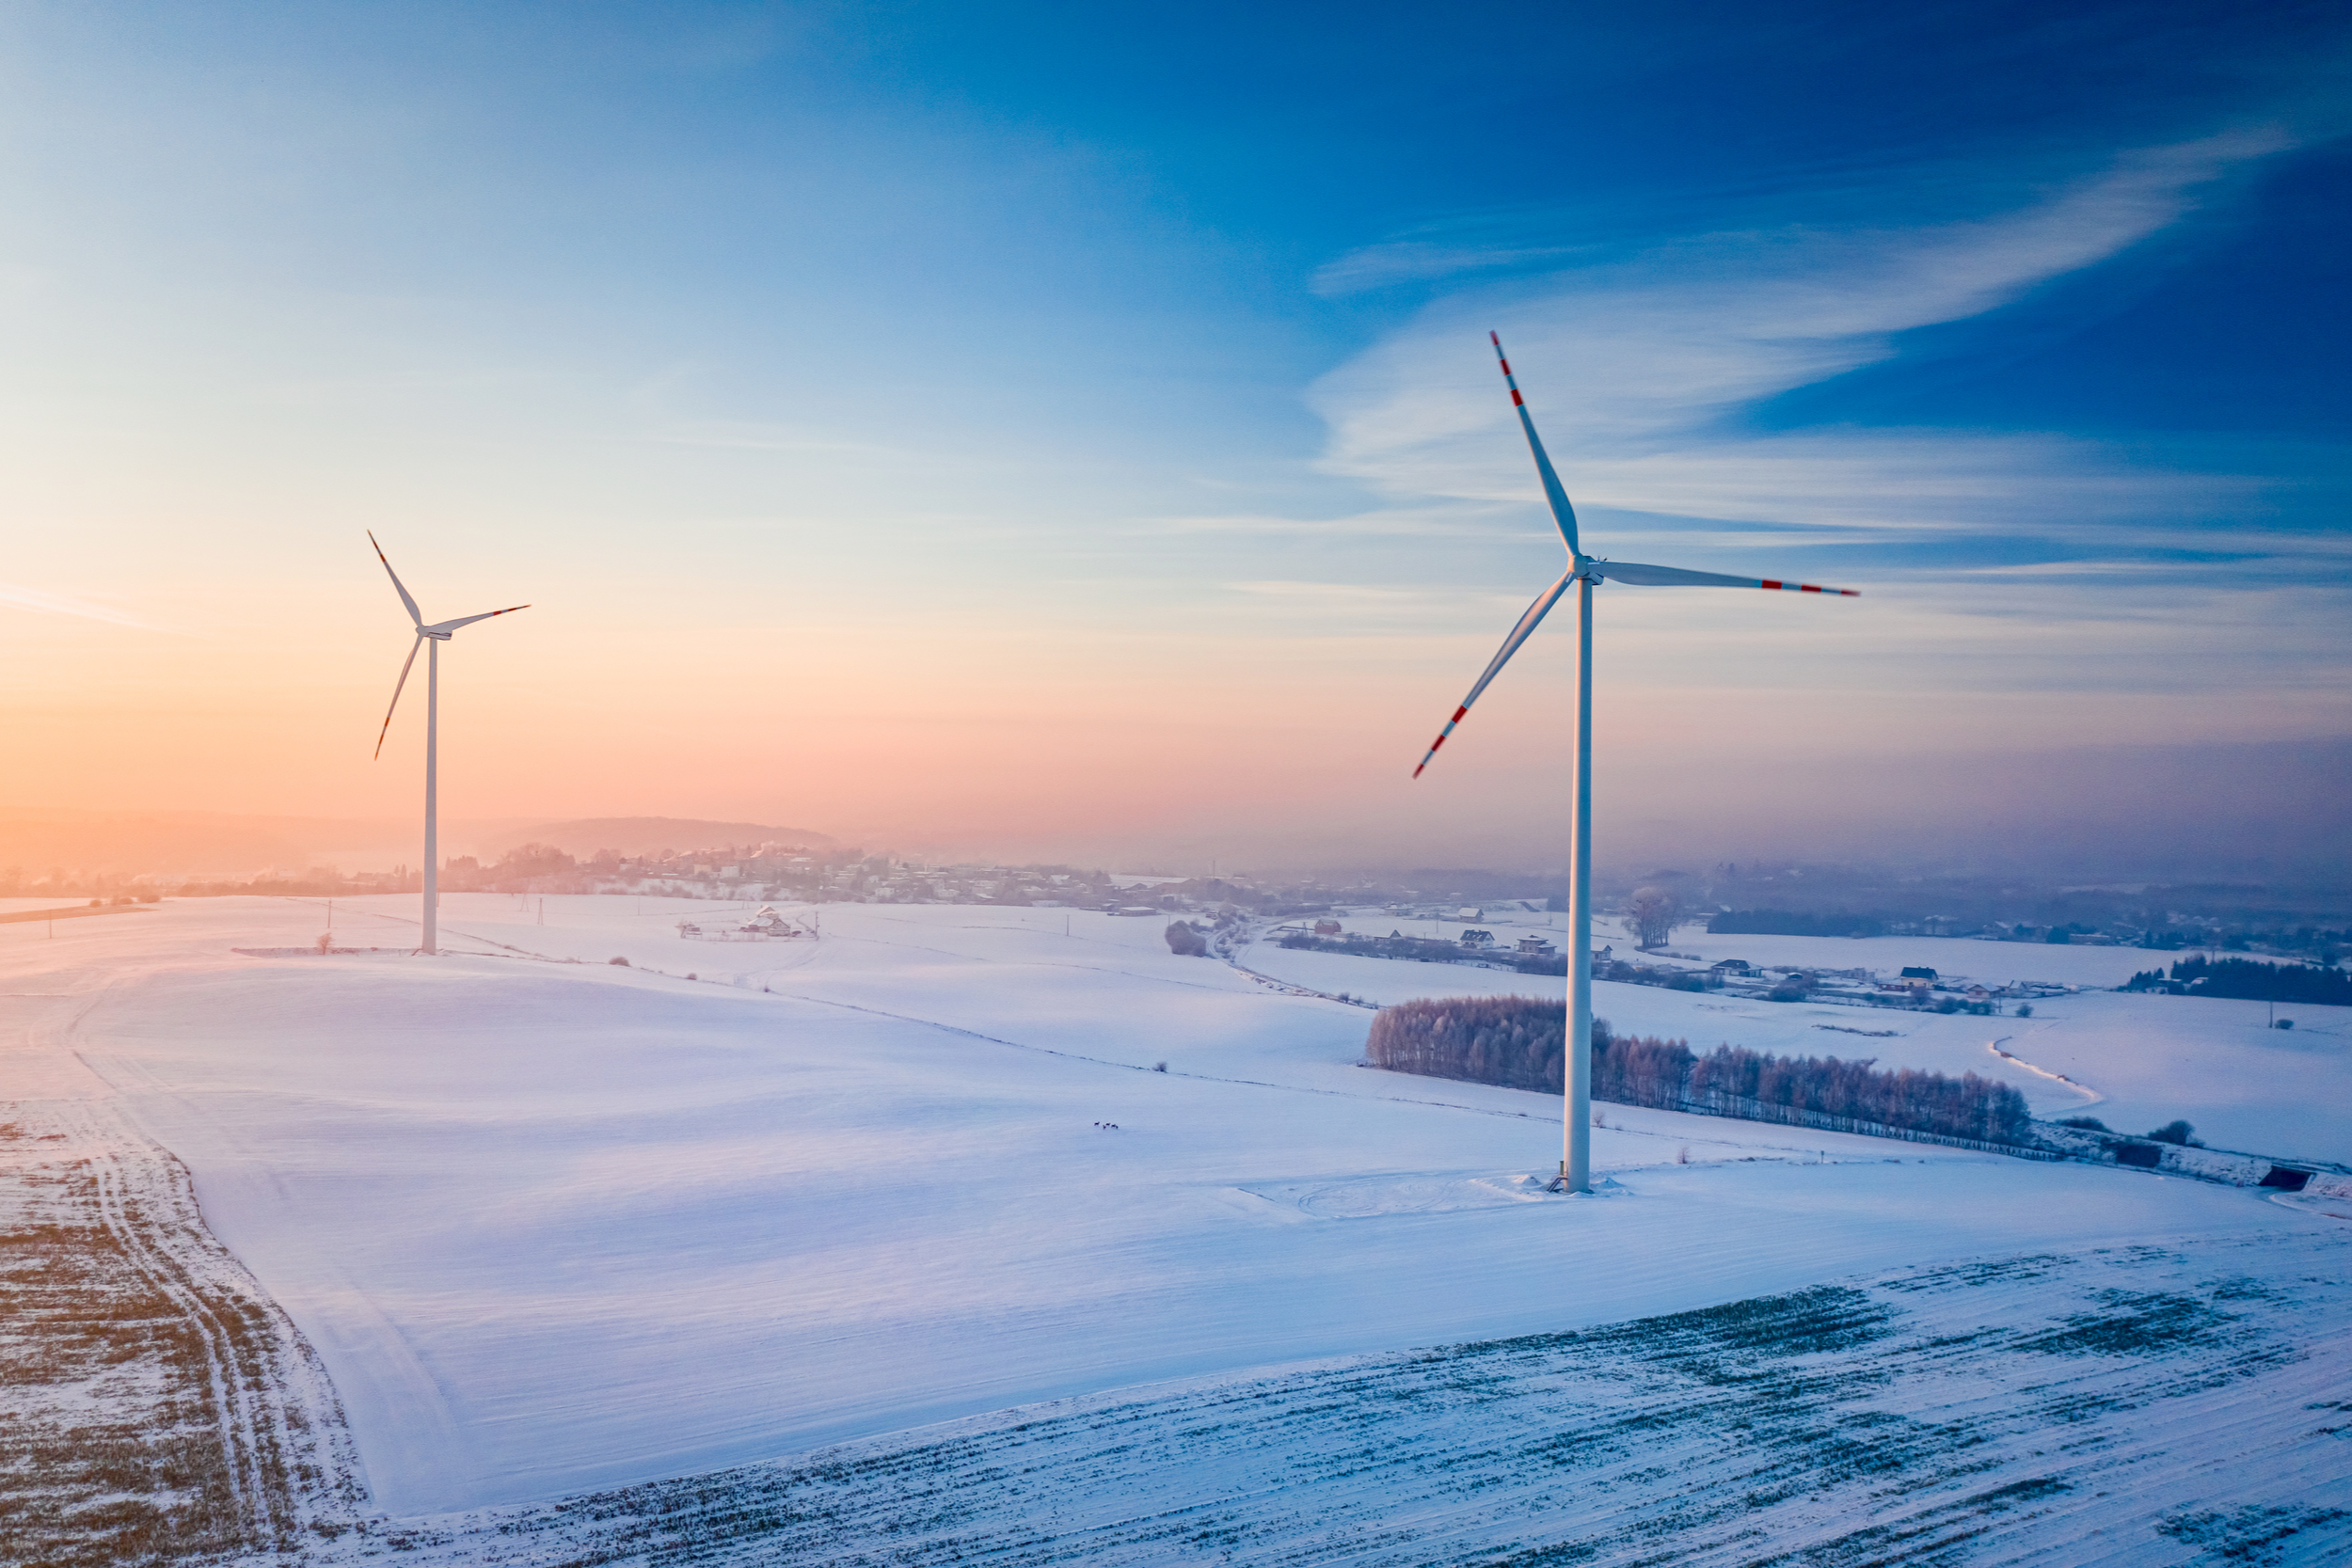 rekordowa energia wiatrowa w Polsce, fot. Shutterstock